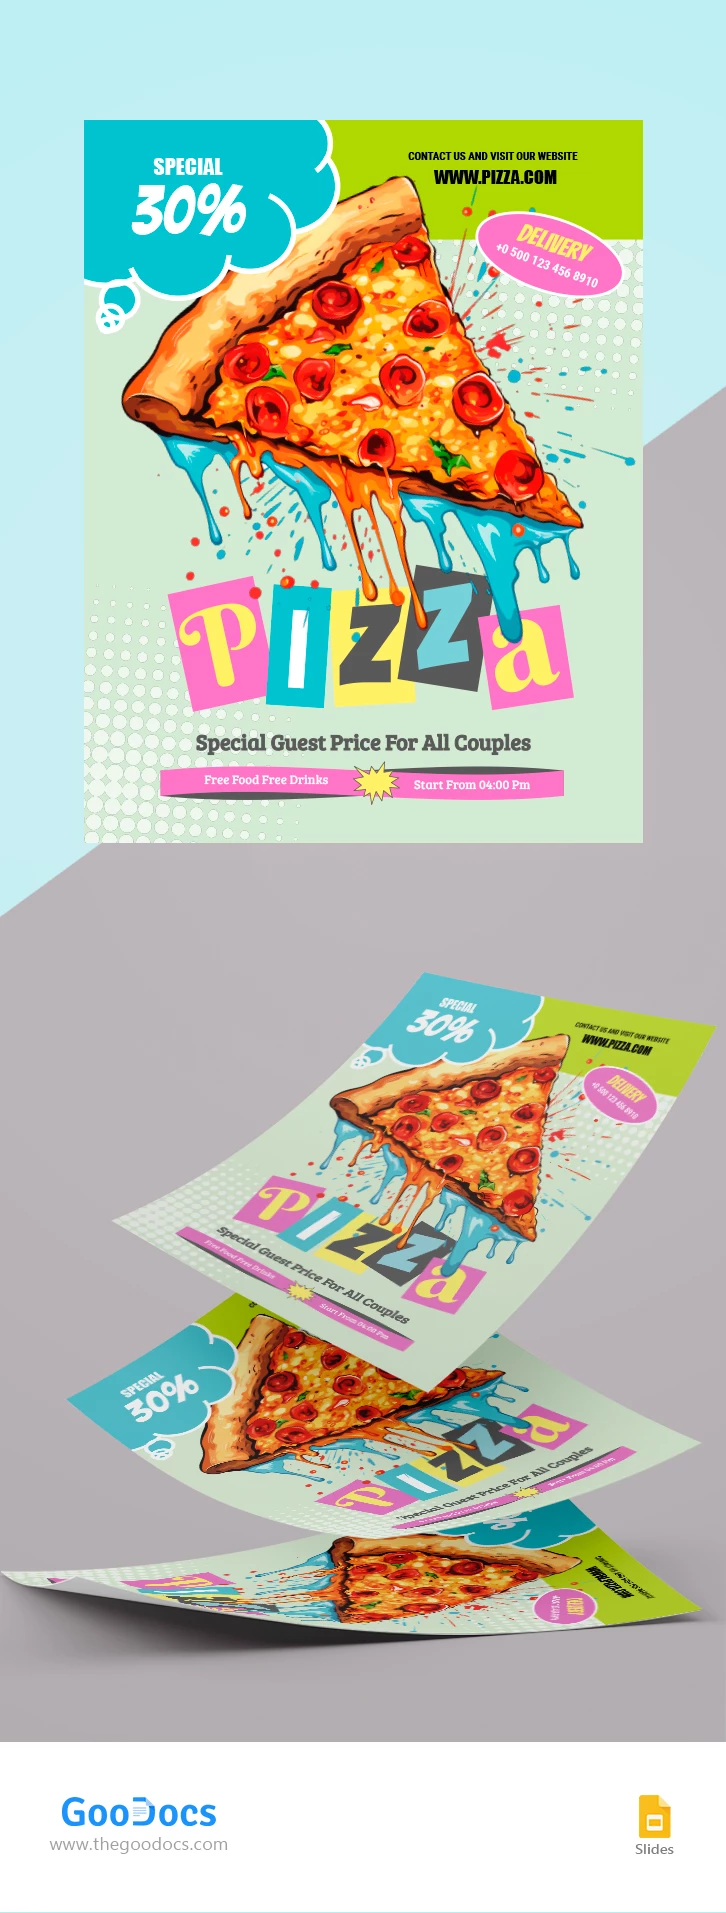 Folleto de pizza - free Google Docs Template - 10067264